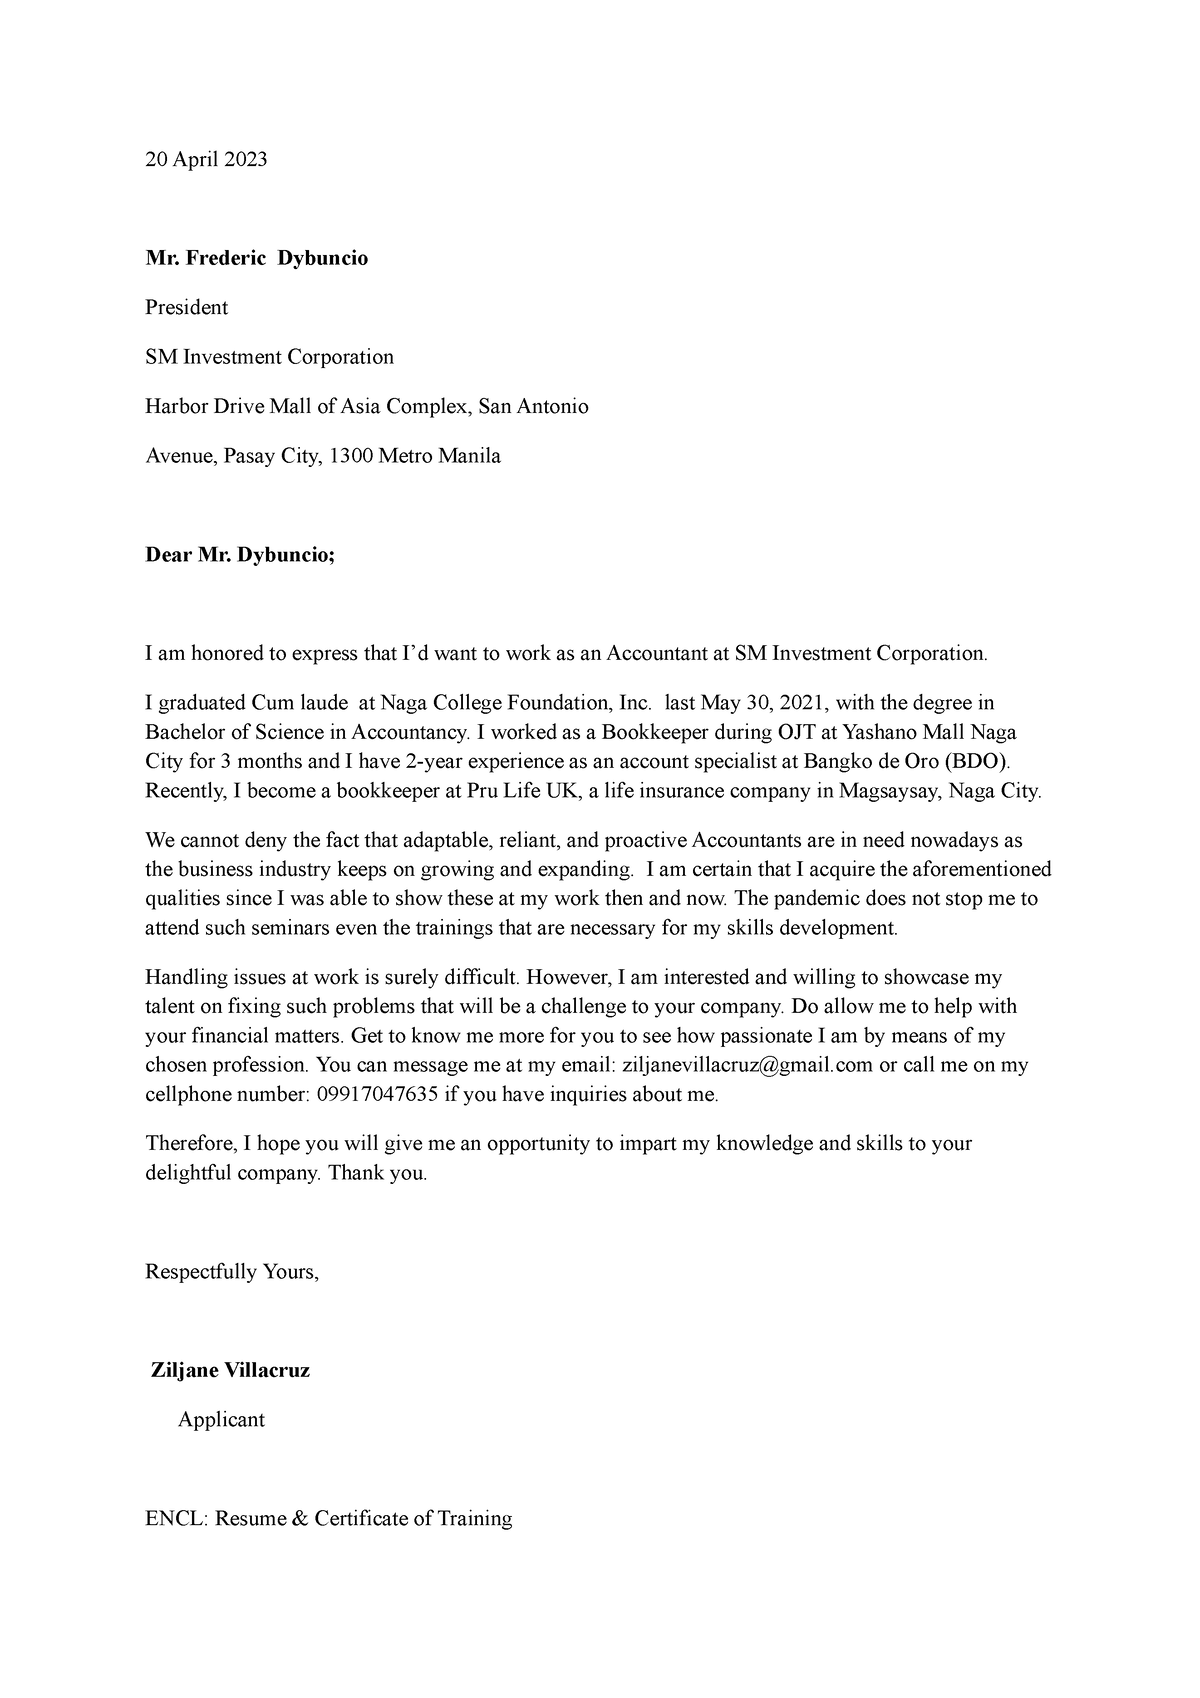 Application Letter (Draft) - 20 April 2023 Mr. Frederic Dybuncio ...